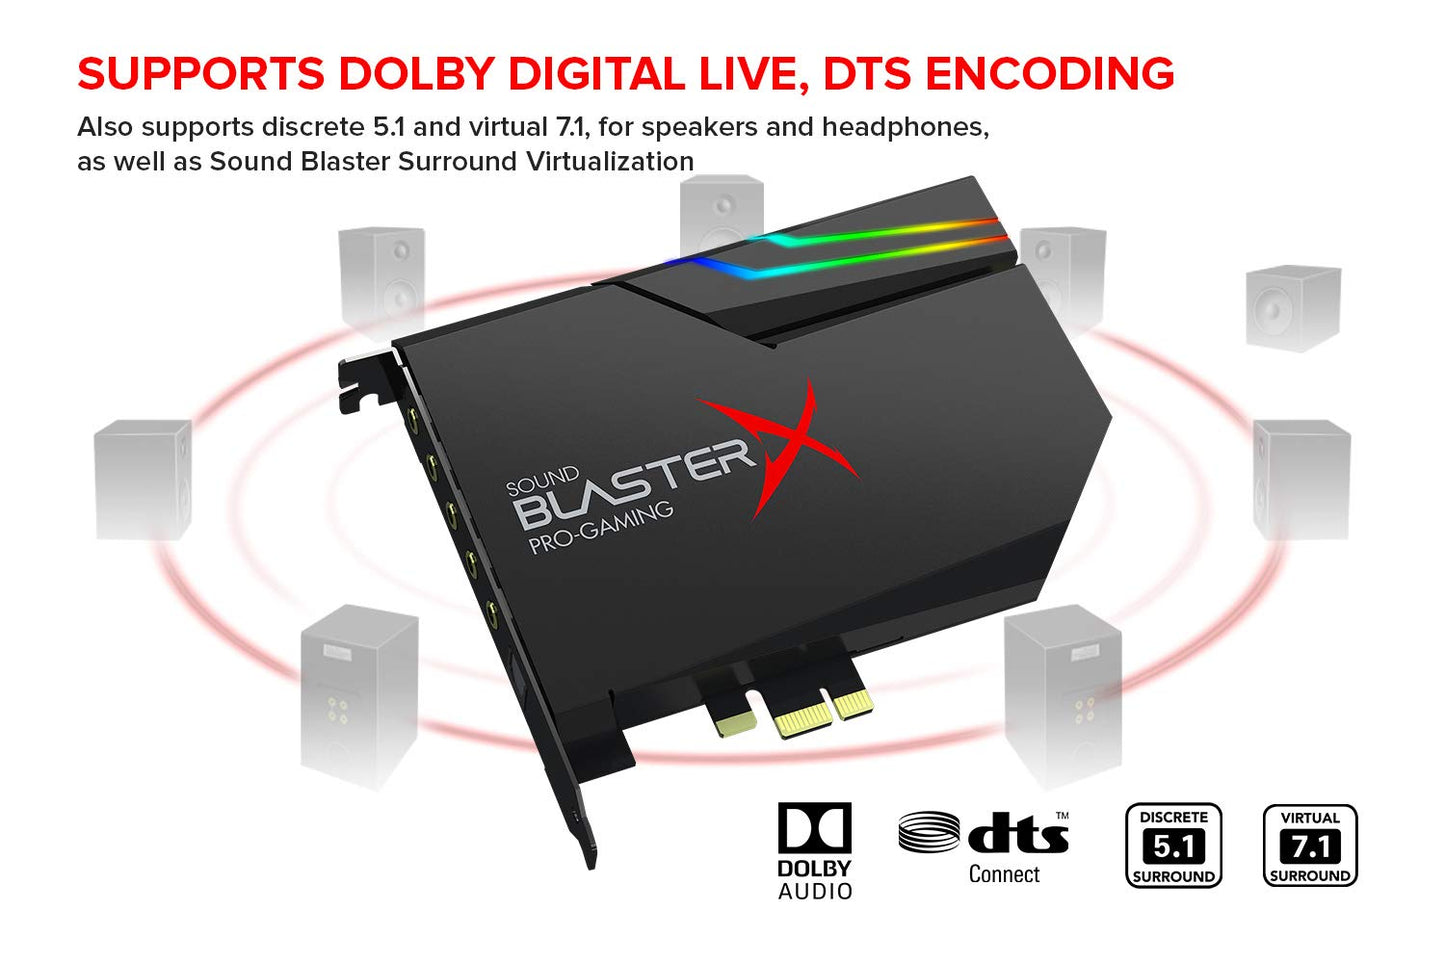 Creative Sound BlasterX AE-5 Plus Pro Gaming Soundcard